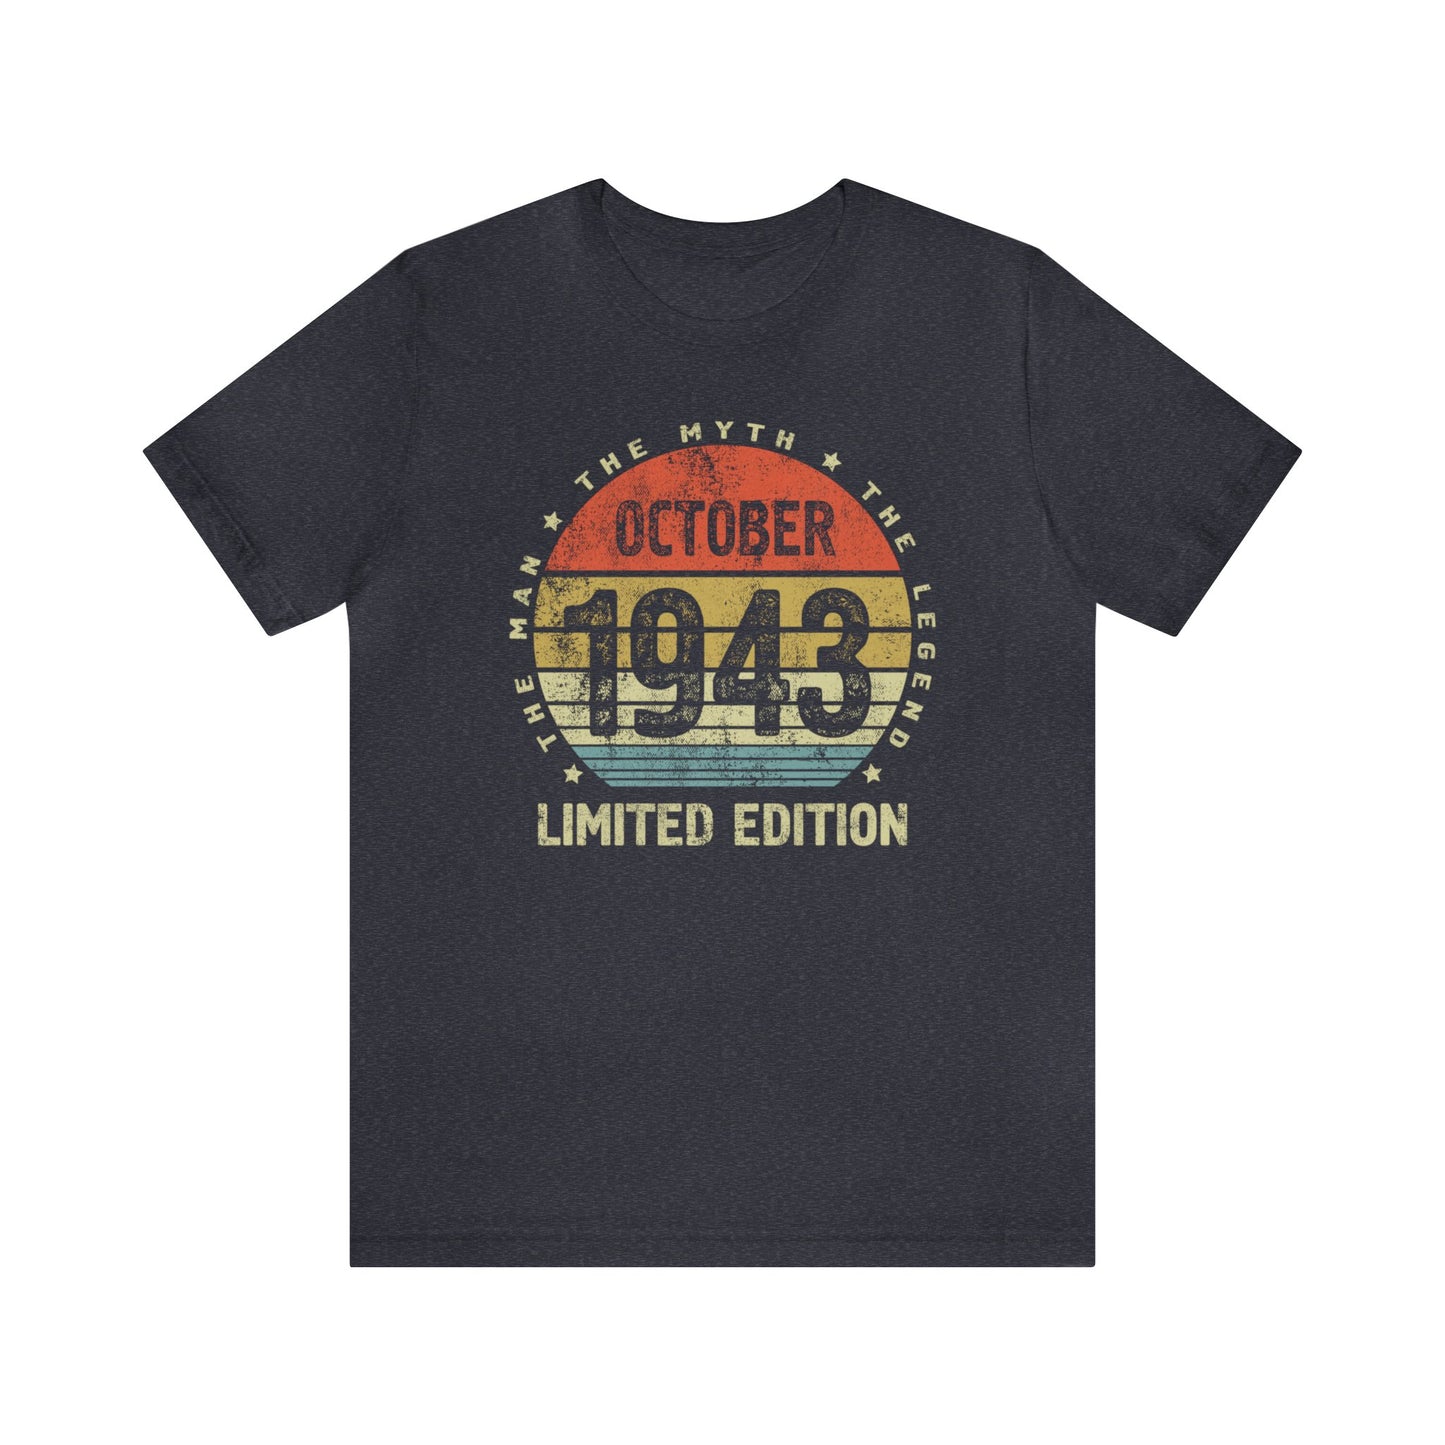 90th birthday gift shirt for men October 1933 birthday gift for husband 90th anniversary Shirt